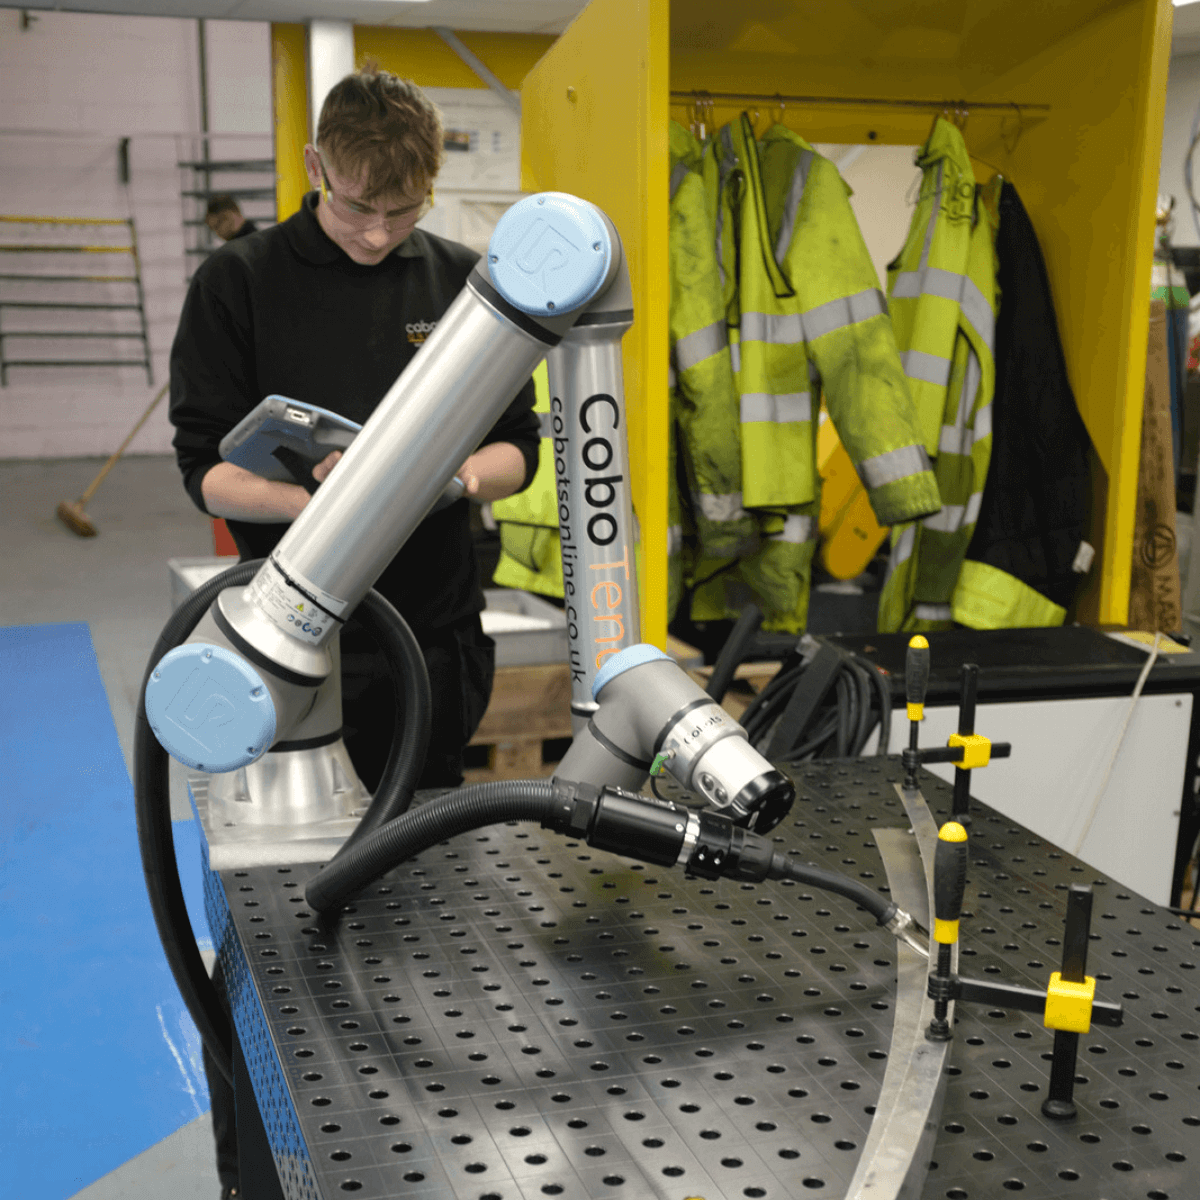 Welding cobots - worker using welding cobot at work station